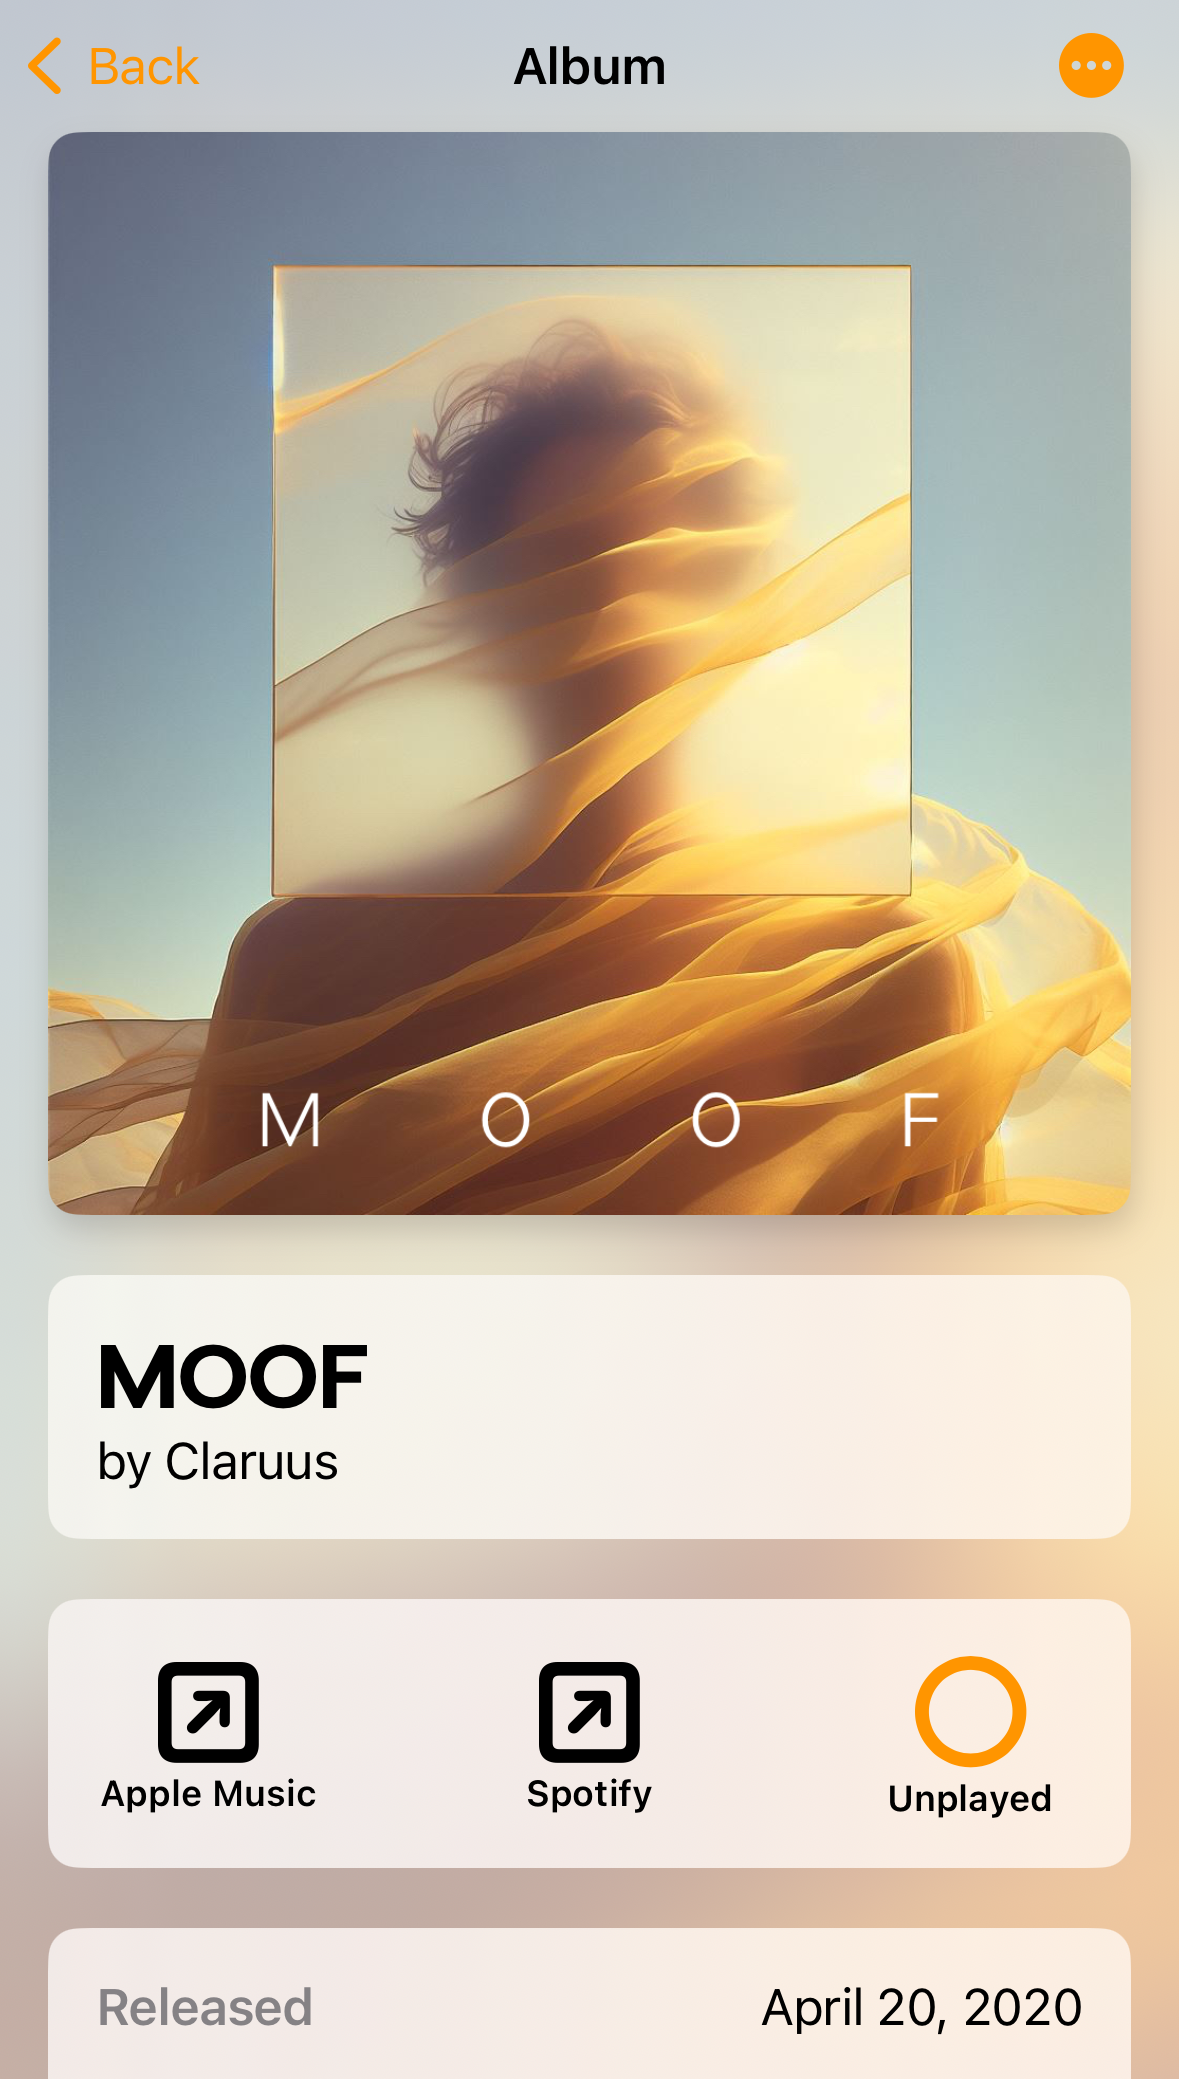 A screenshot of the album detail view featureing an album called MOOF by Claruus